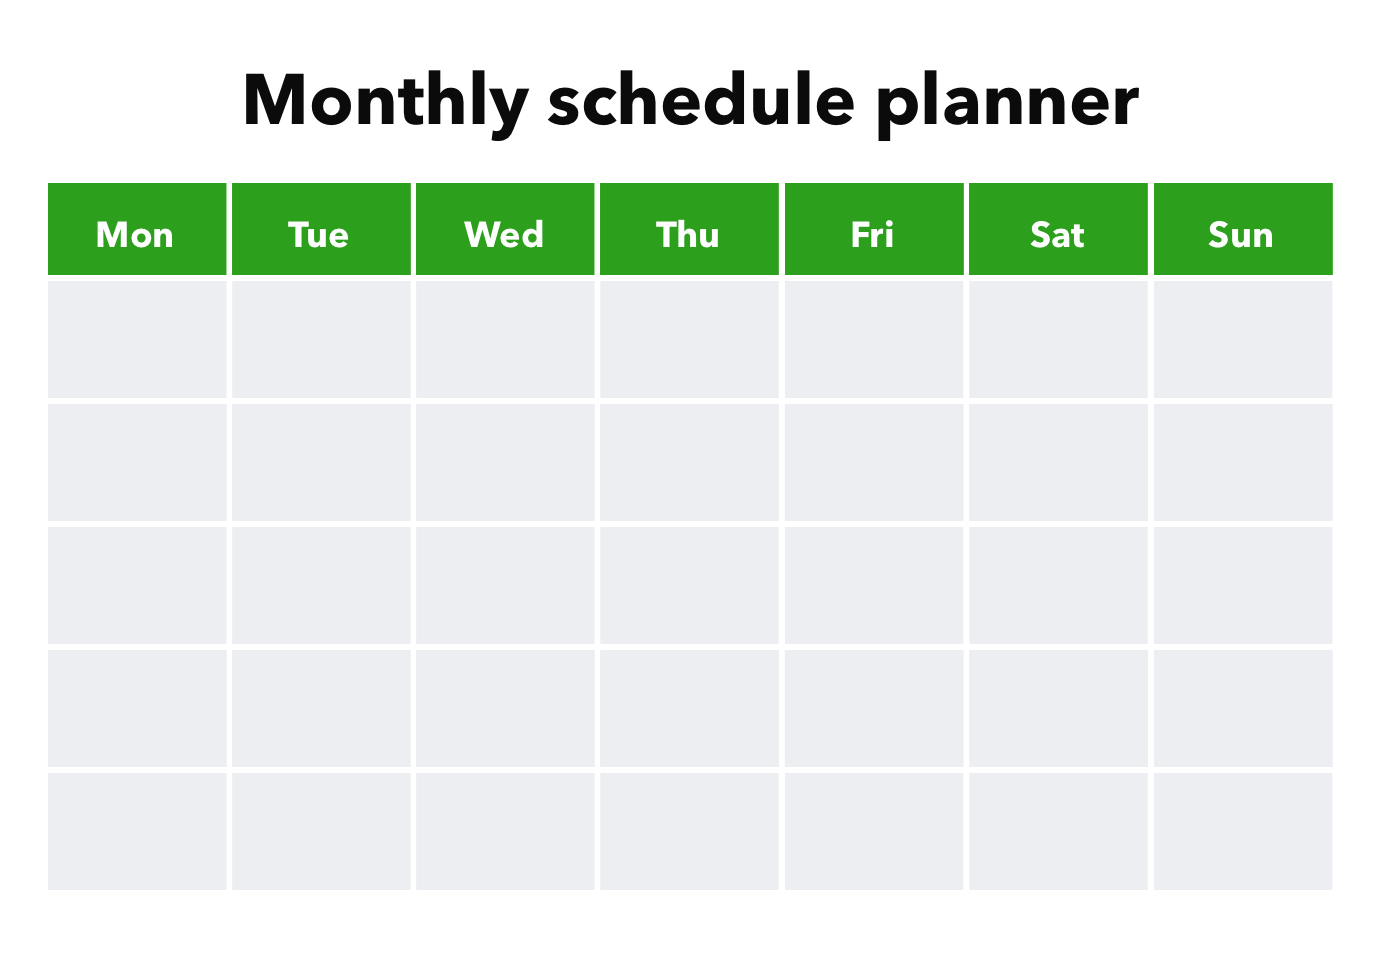 Monthly schedule planner